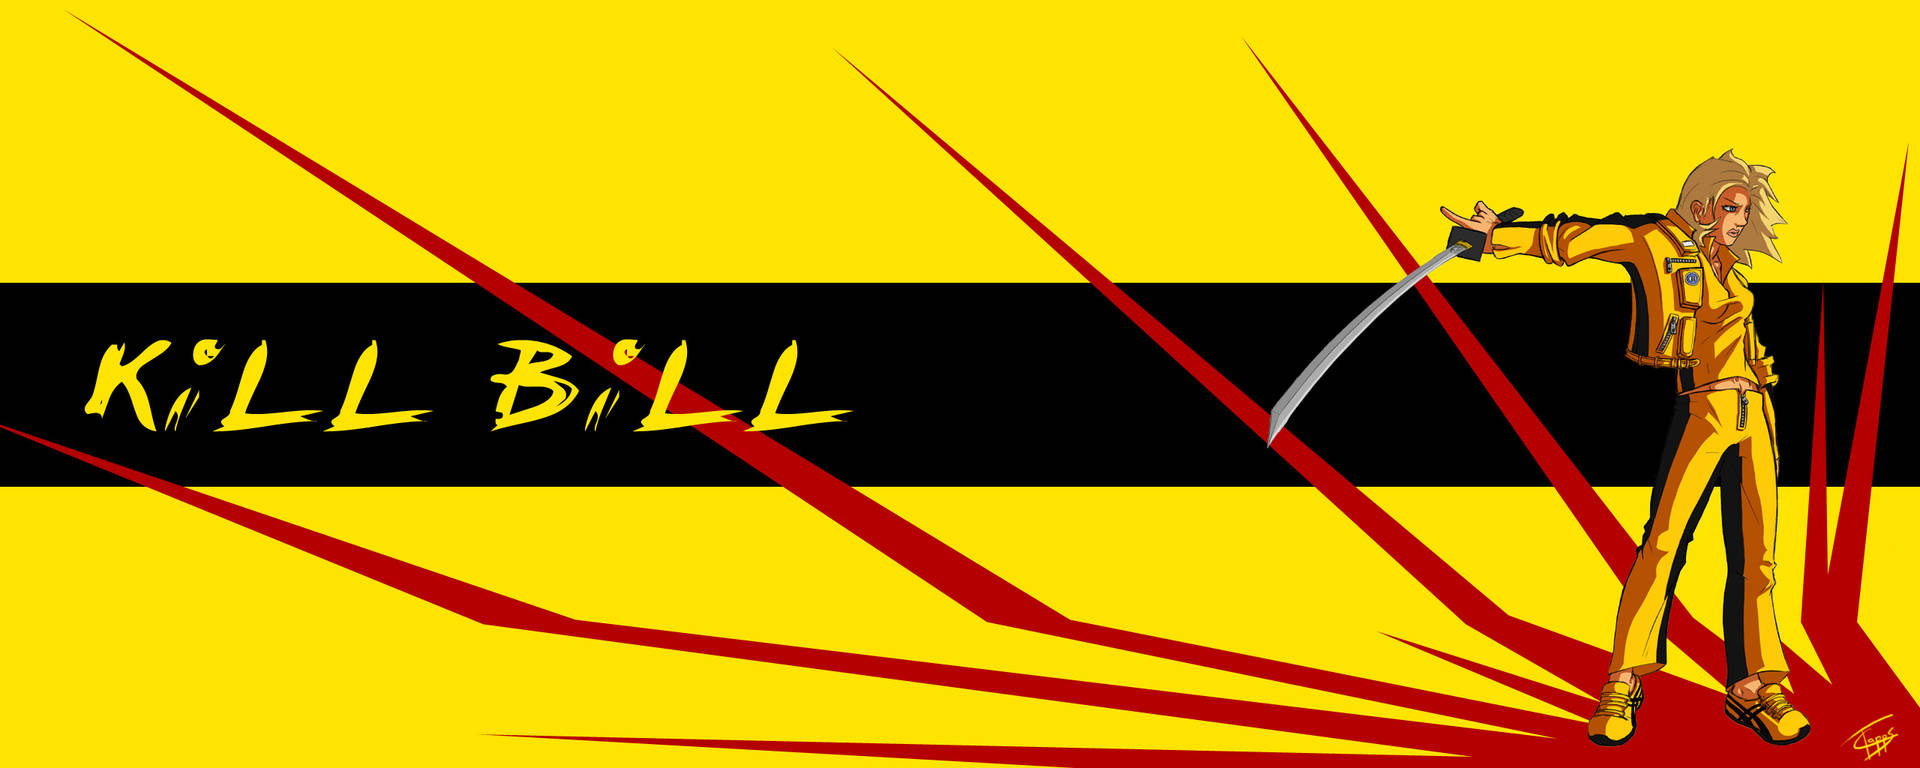 Kill Bill Animated Style Poster